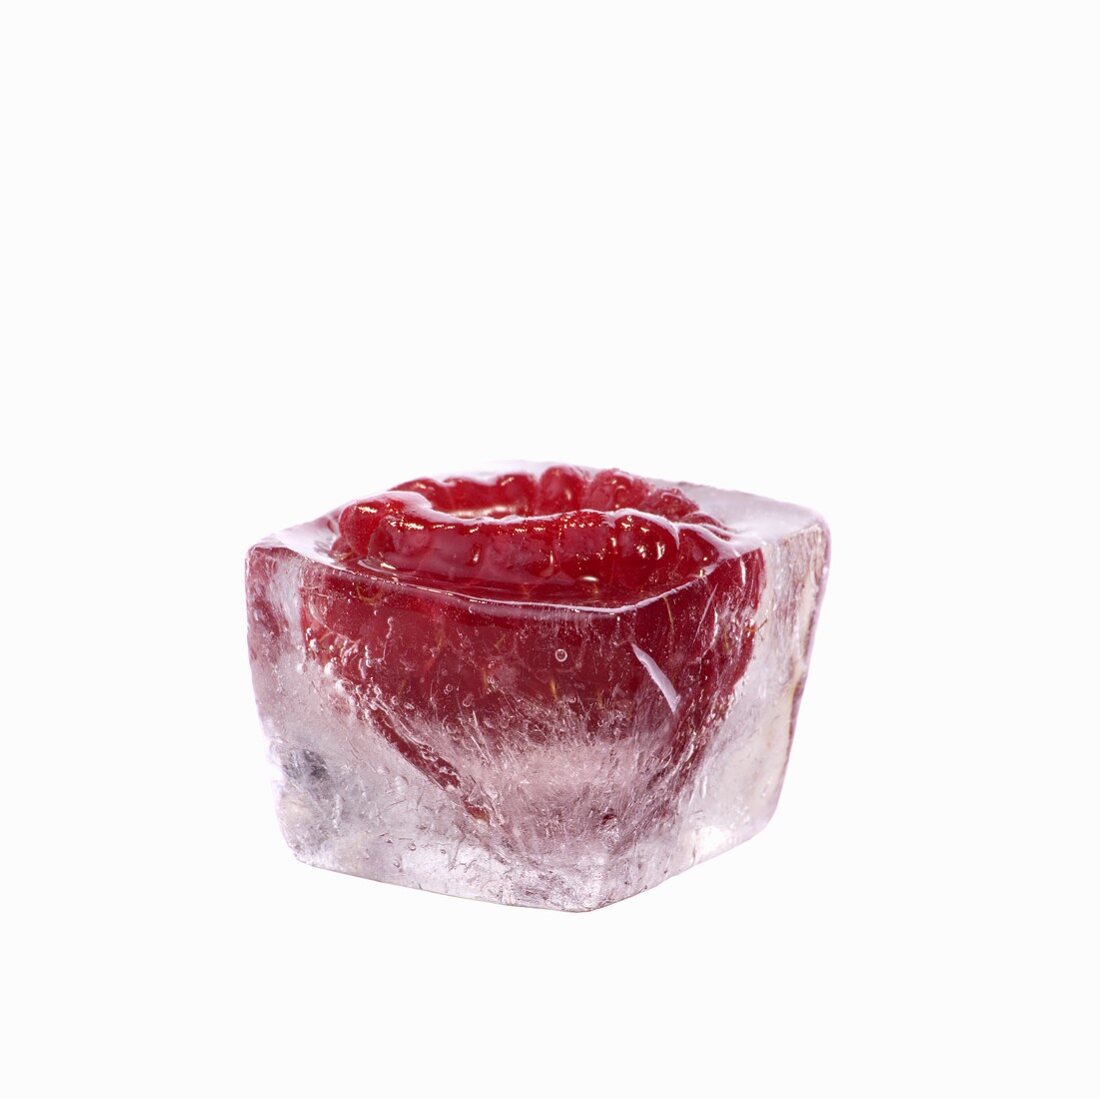 Raspberry in an ice cube